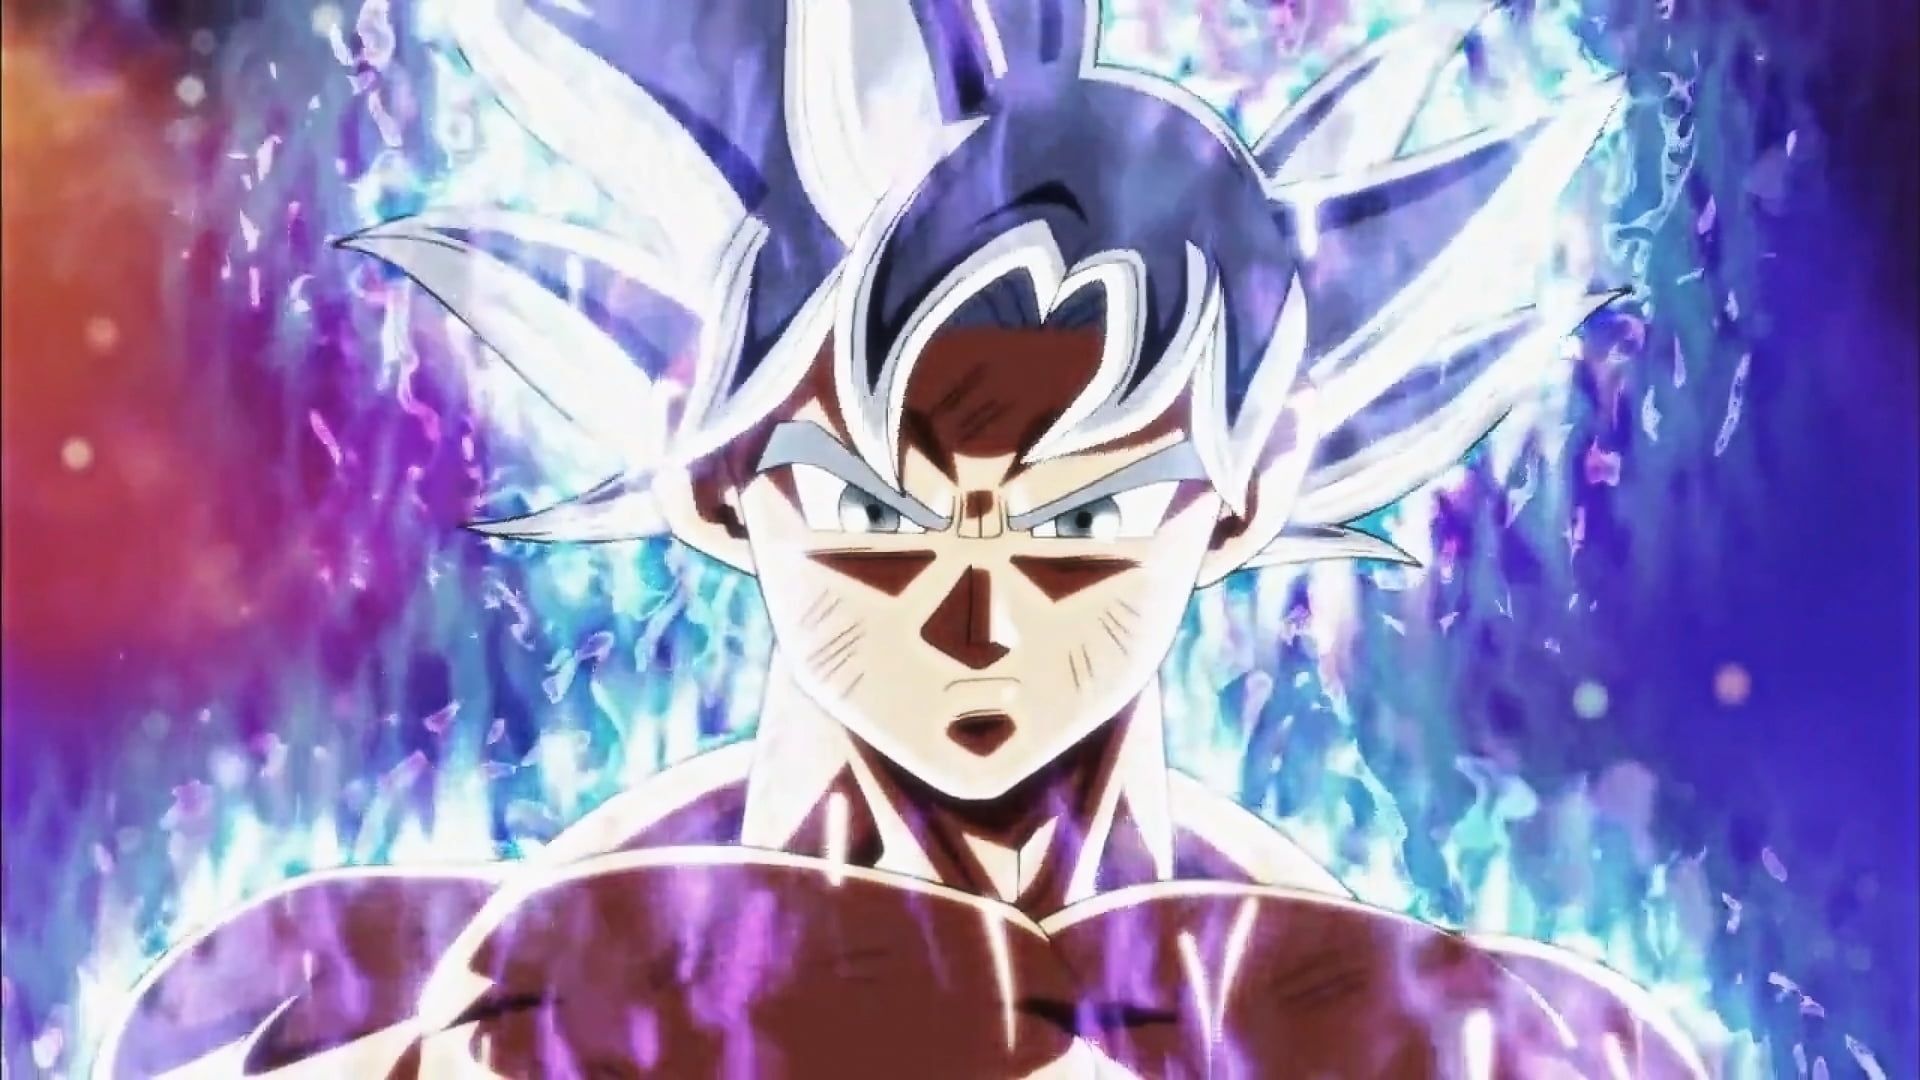 Goku as seen in the Dragon Ball Super anime (Image via Toei Animation)